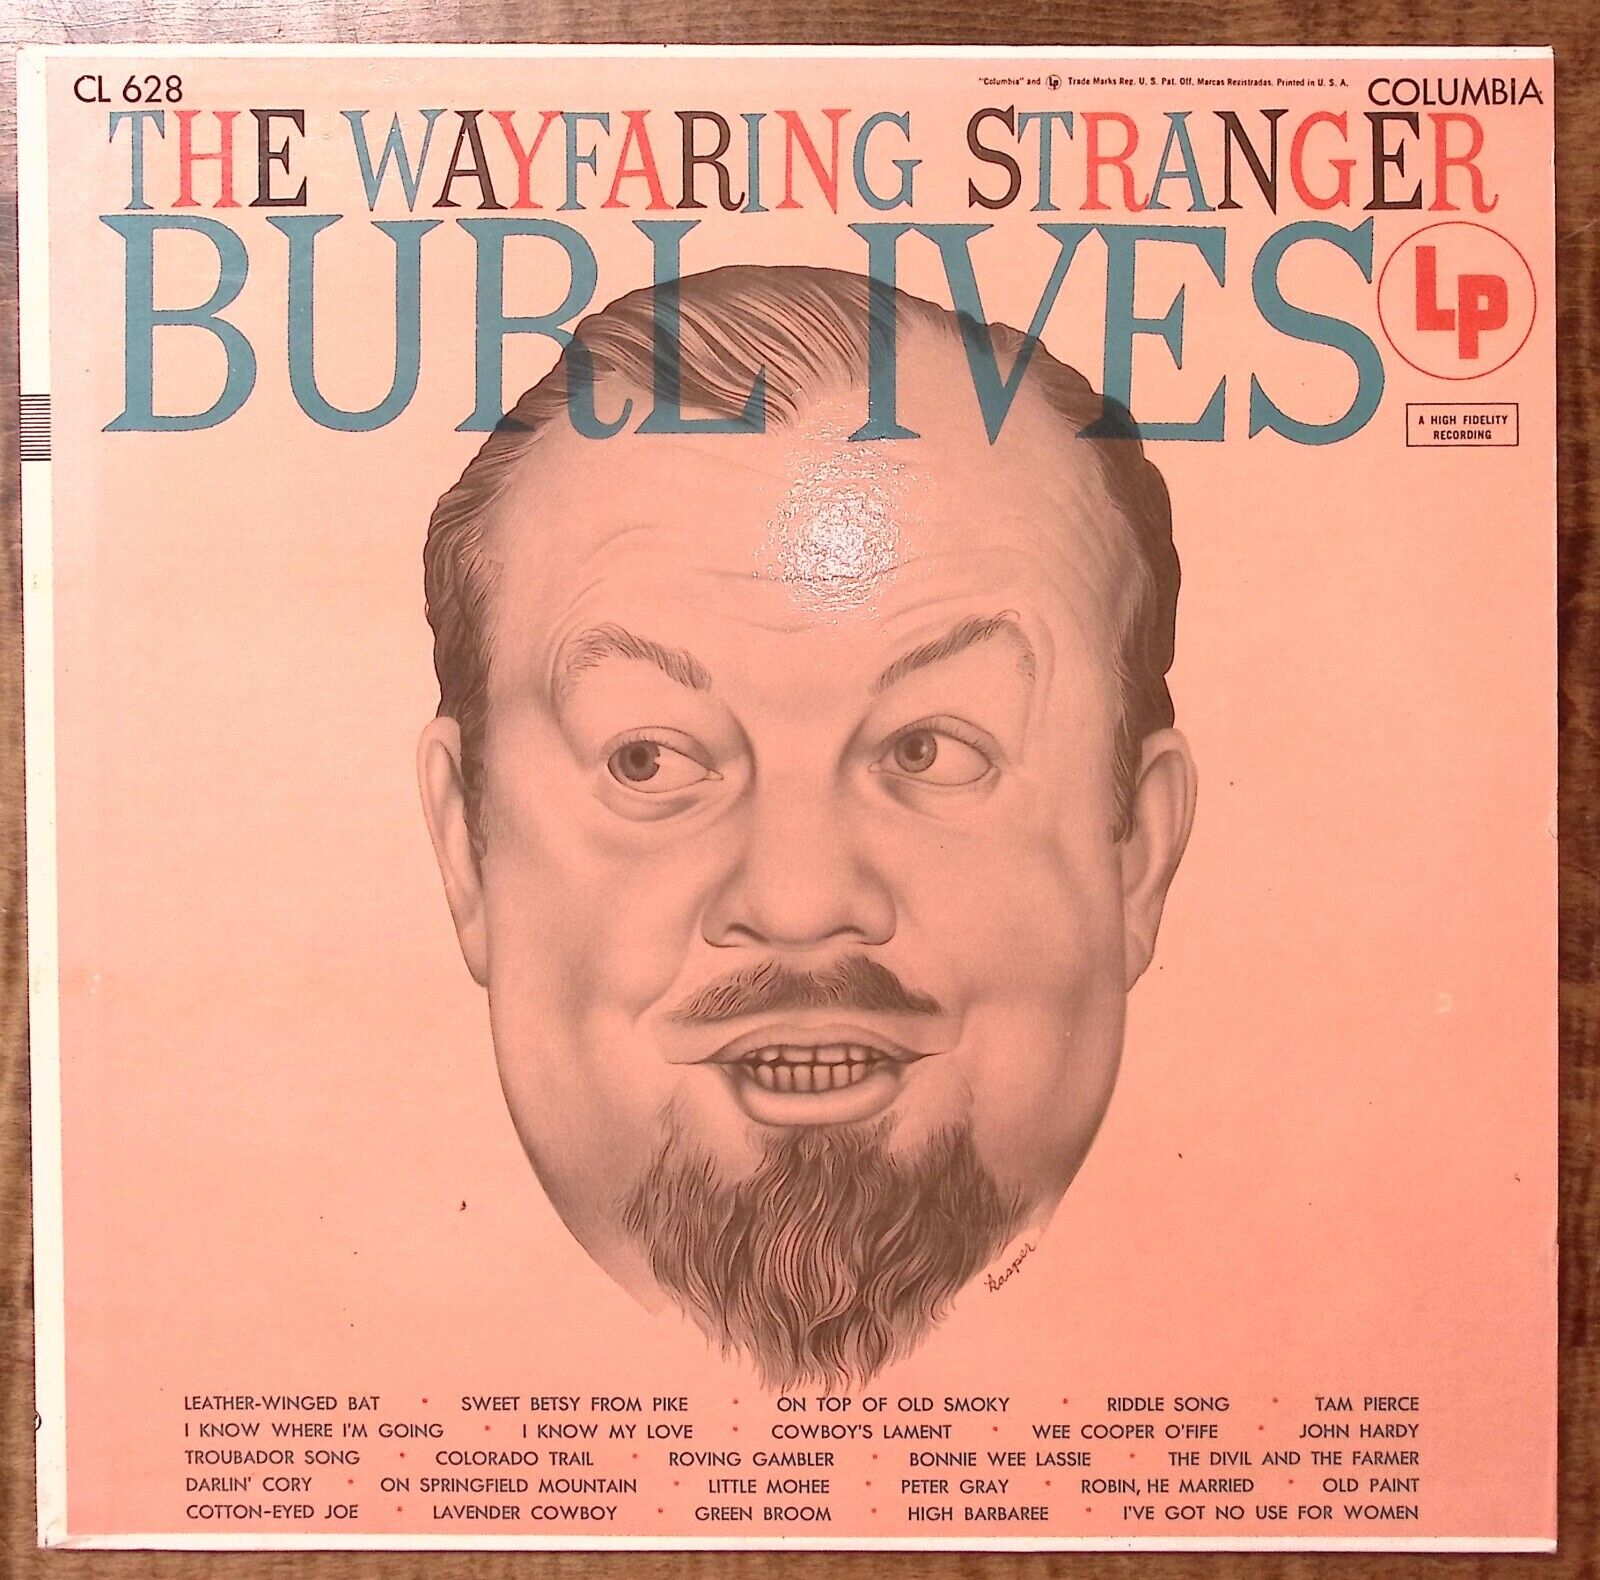 BURL IVES THE WAYFARING STRANGER COLUMBIA RECORDS VINYL LP 196-49